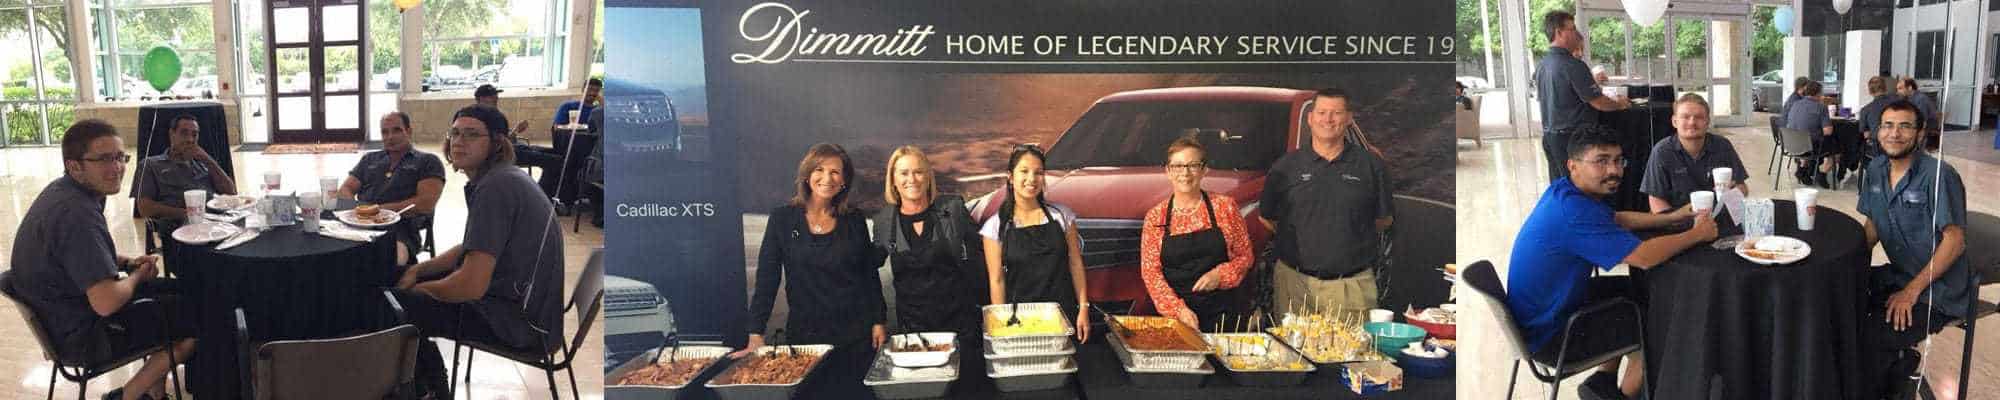 dimmitt-staff-appreciation-luncheon-featured